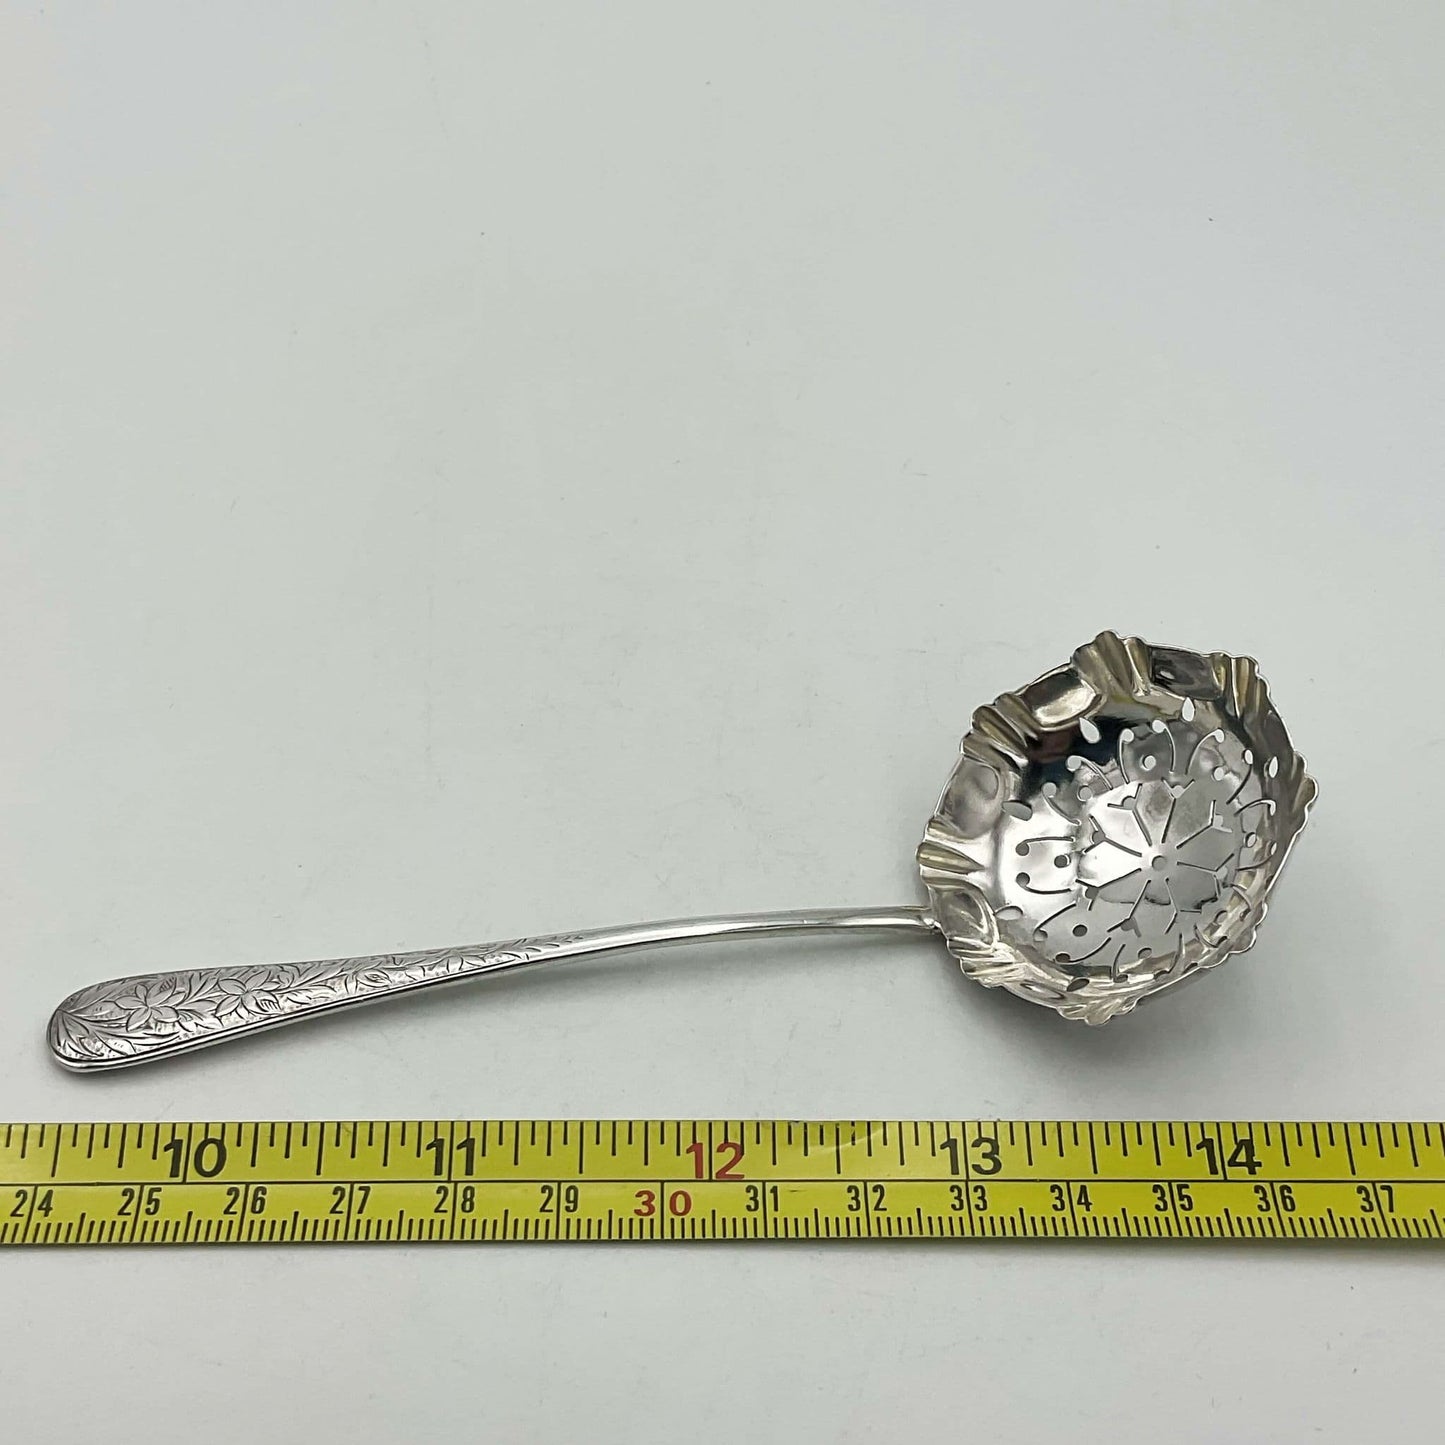 Antique Silver Sugar Sifter Spoon Hallmarked 1894